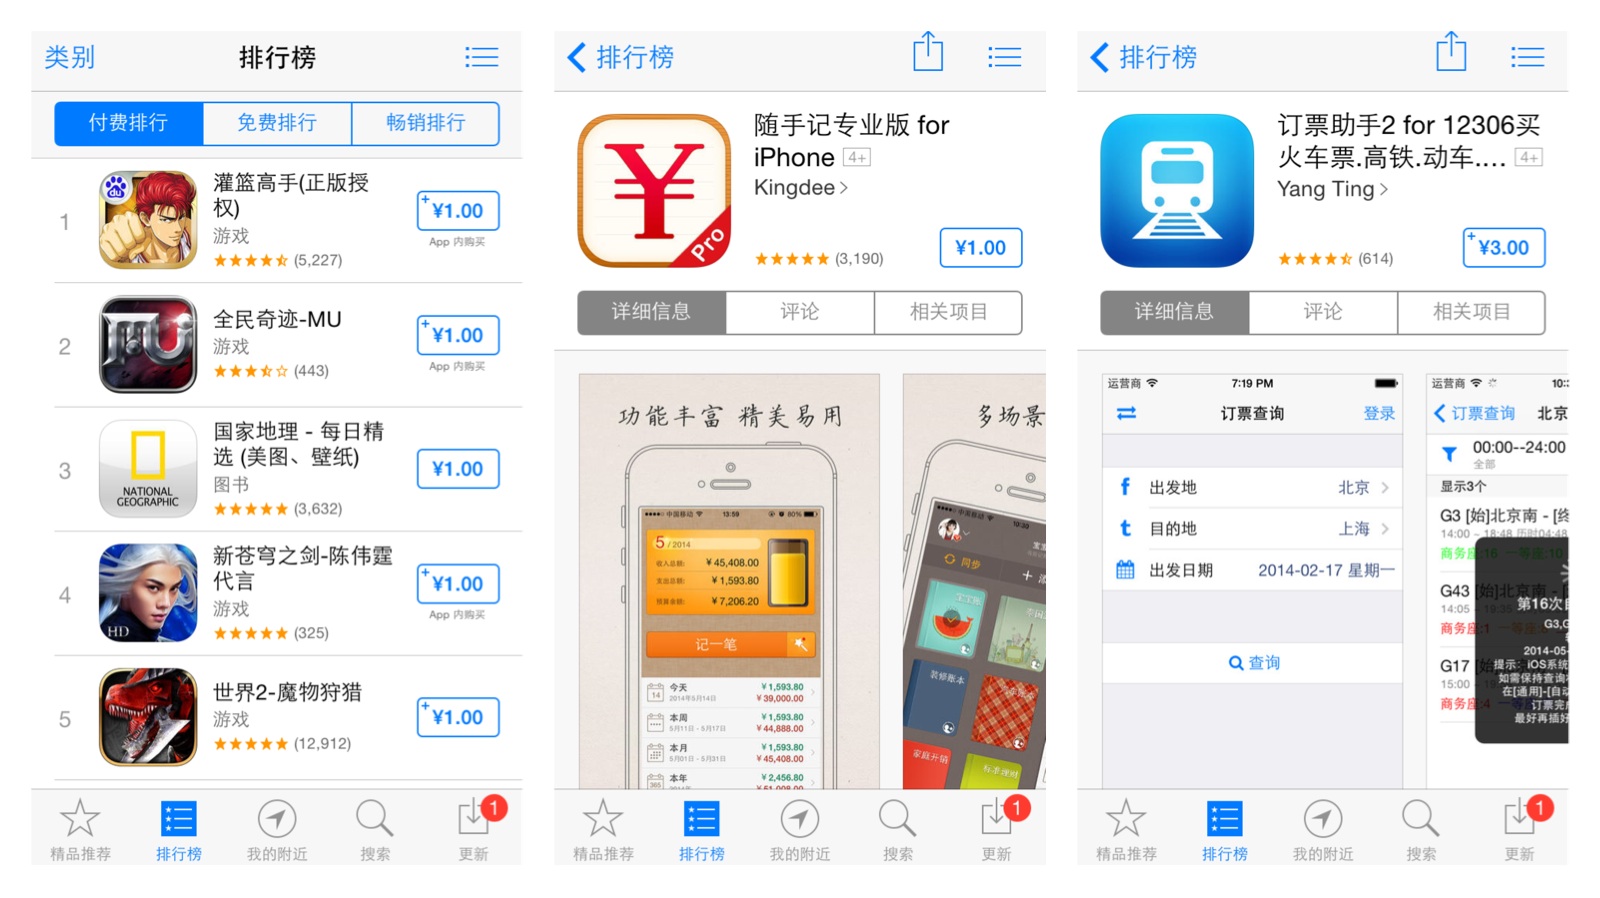 China iOS App Store UnionPay Promotion Image